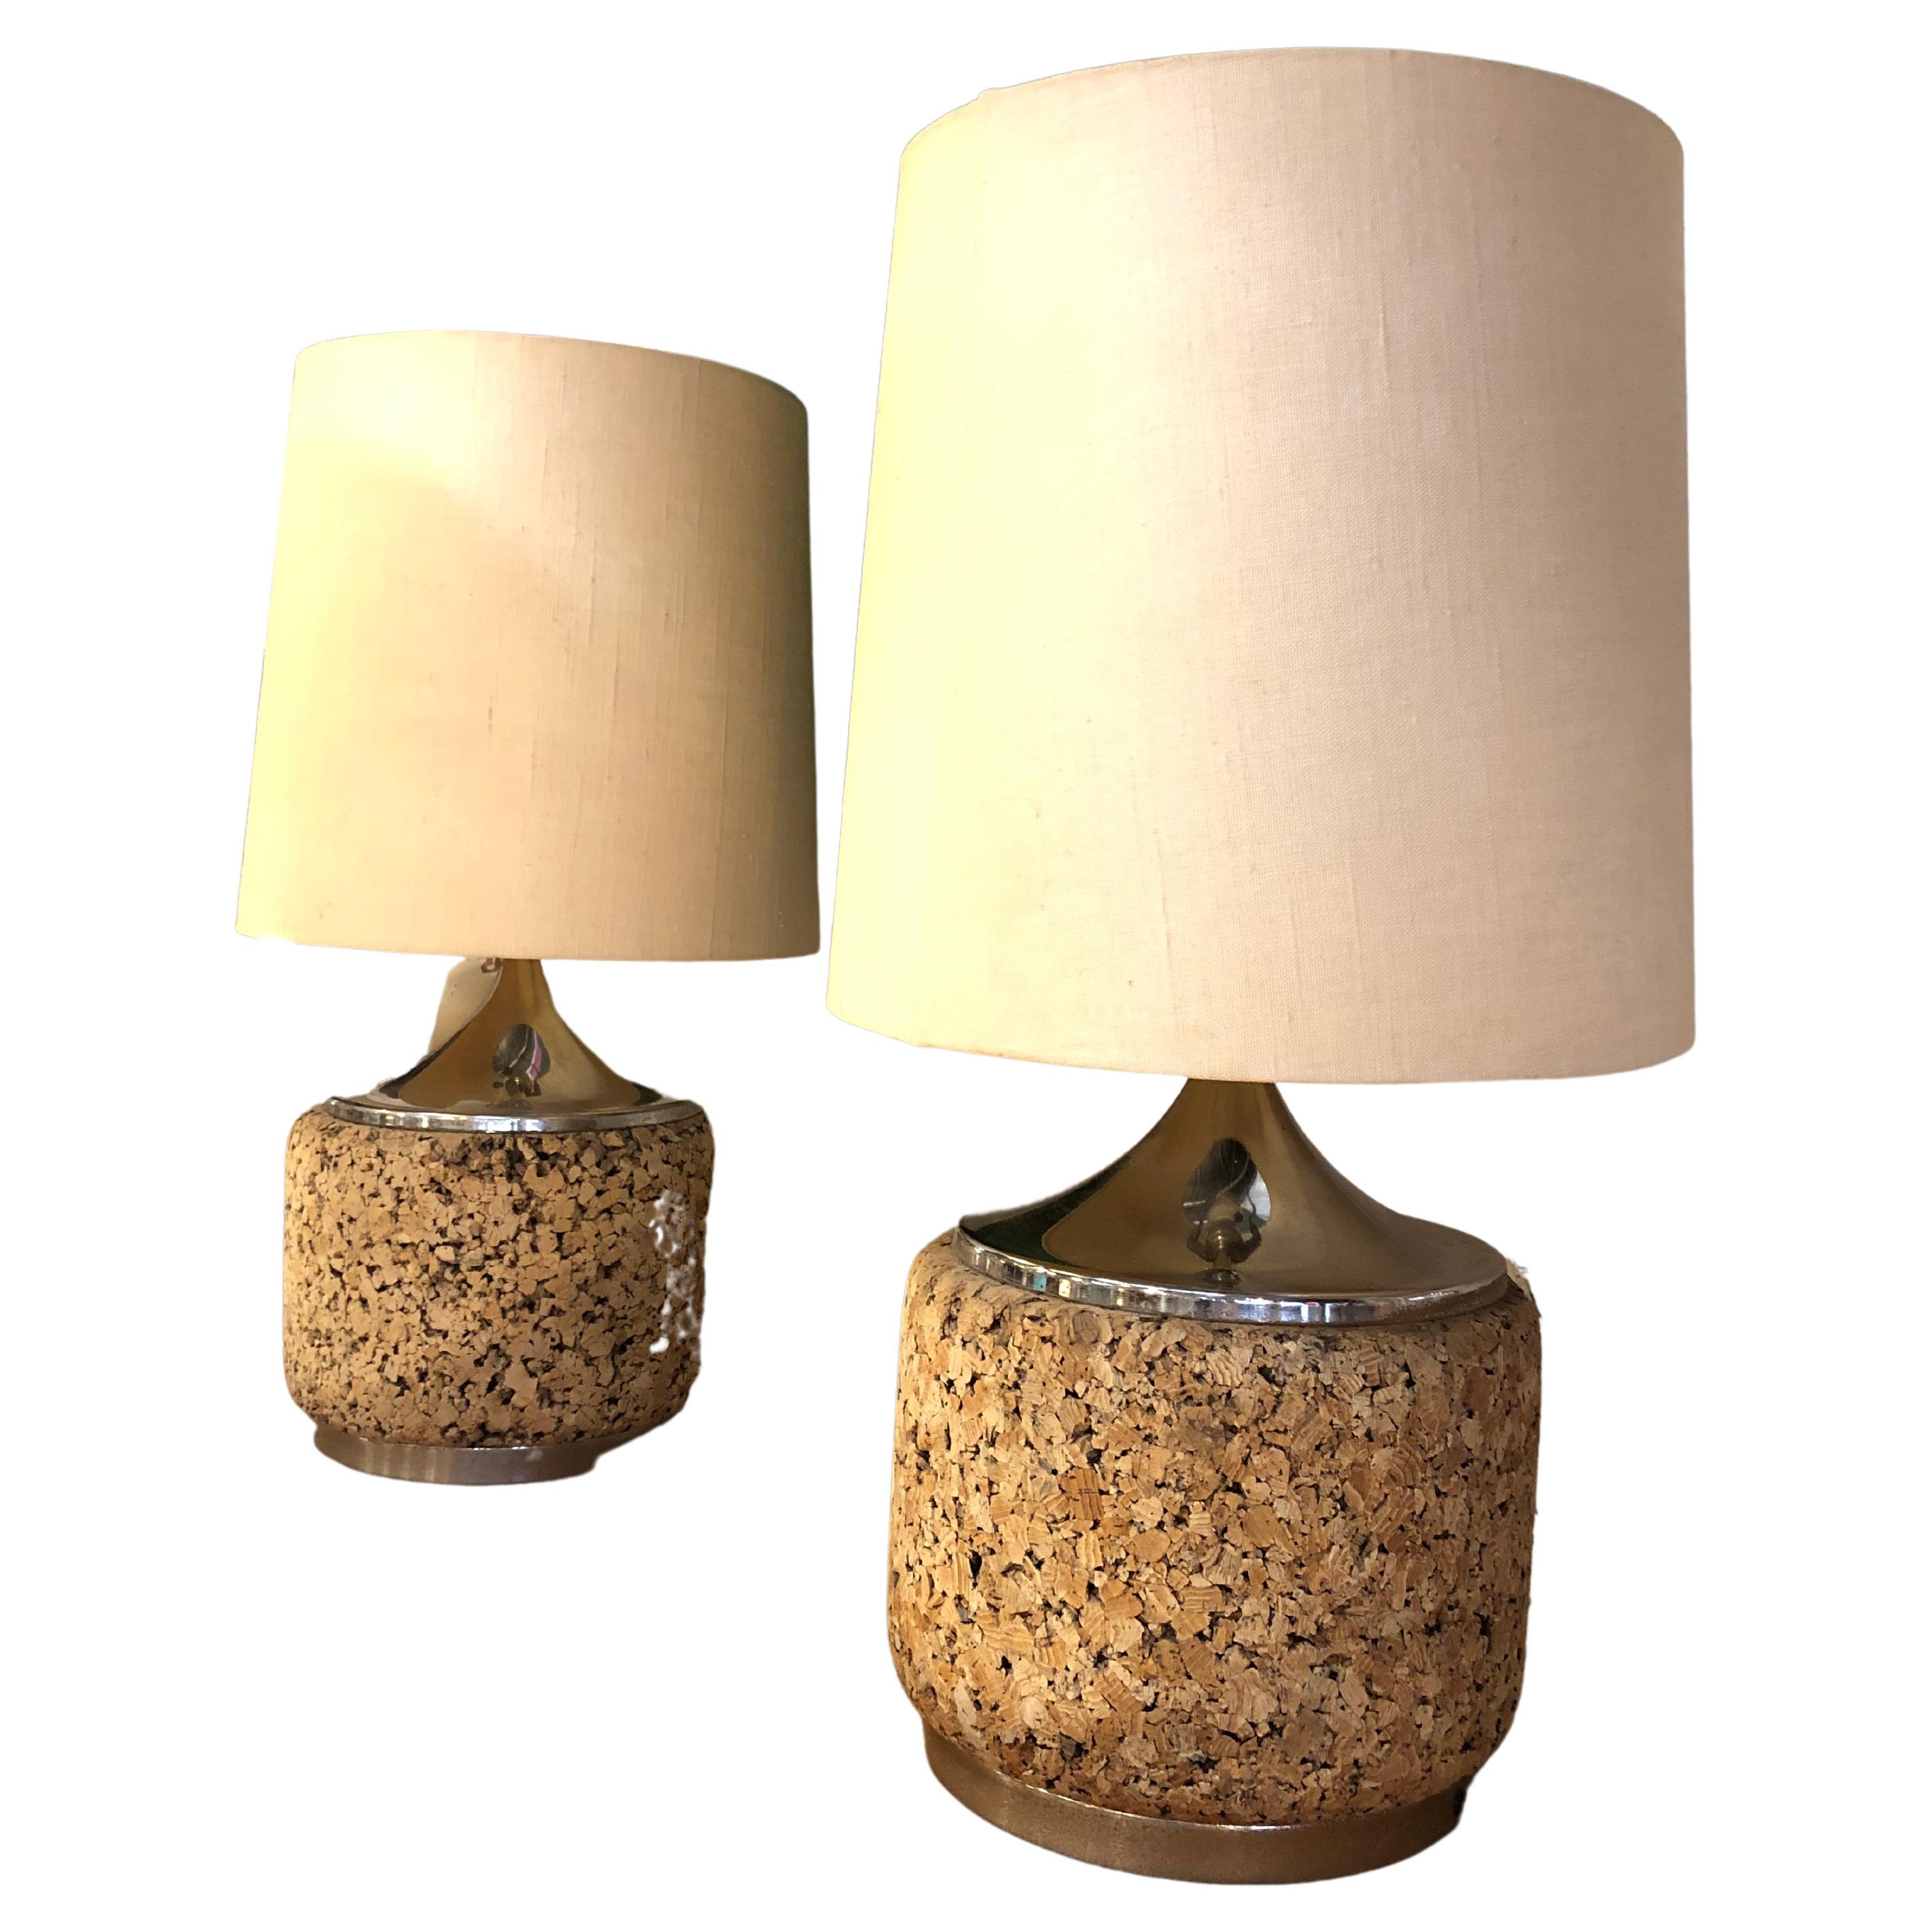 Mid-Century Modern Cork Lamps